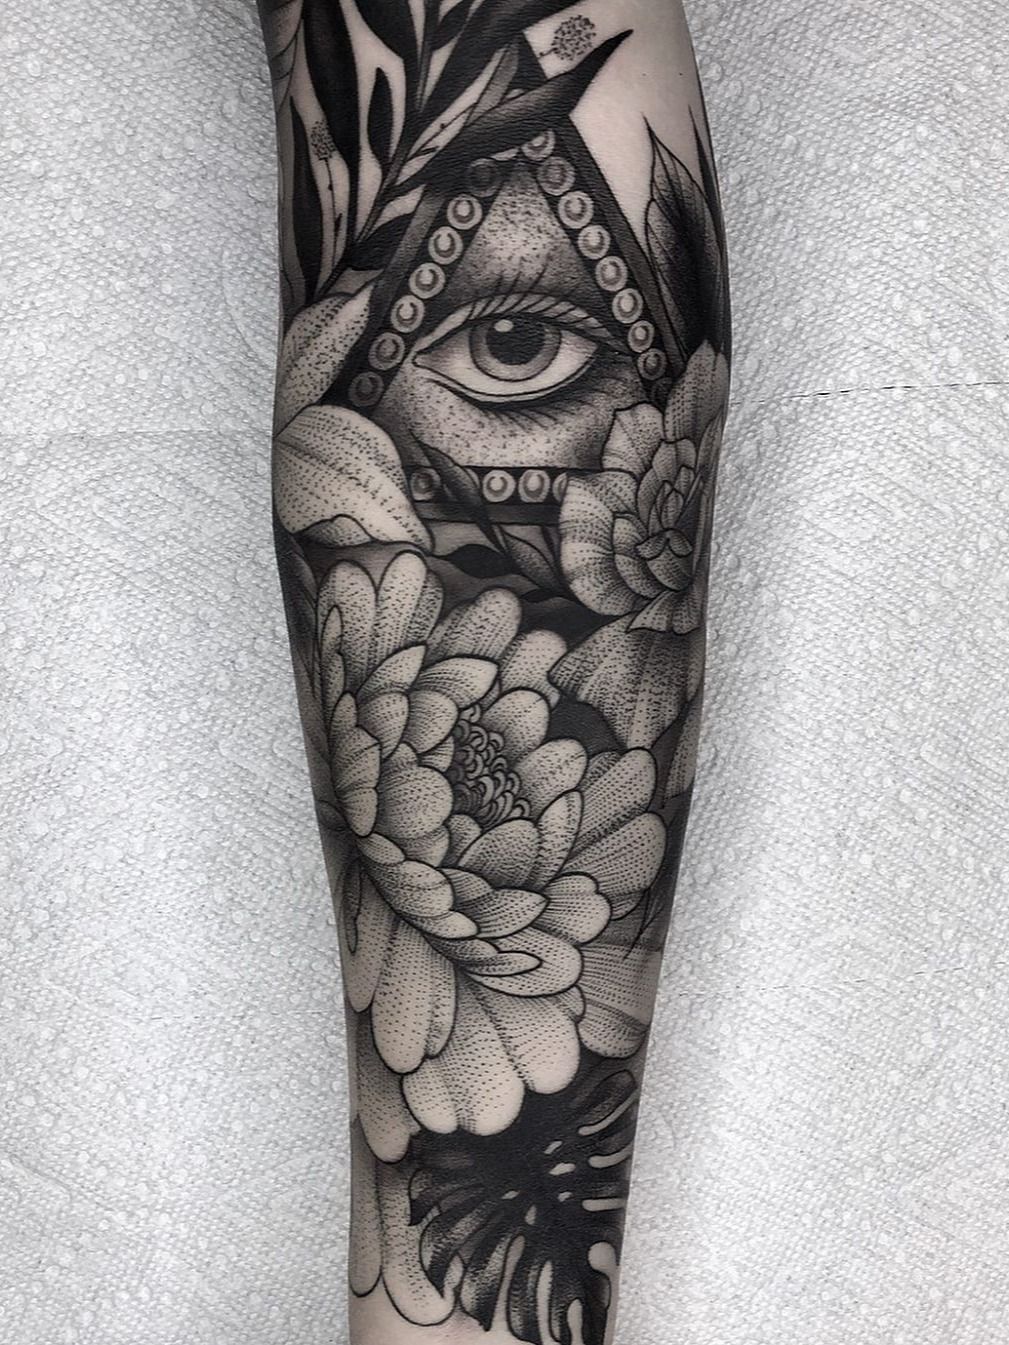 Hand Eye Tattoo - Best Tattoo Ideas Gallery